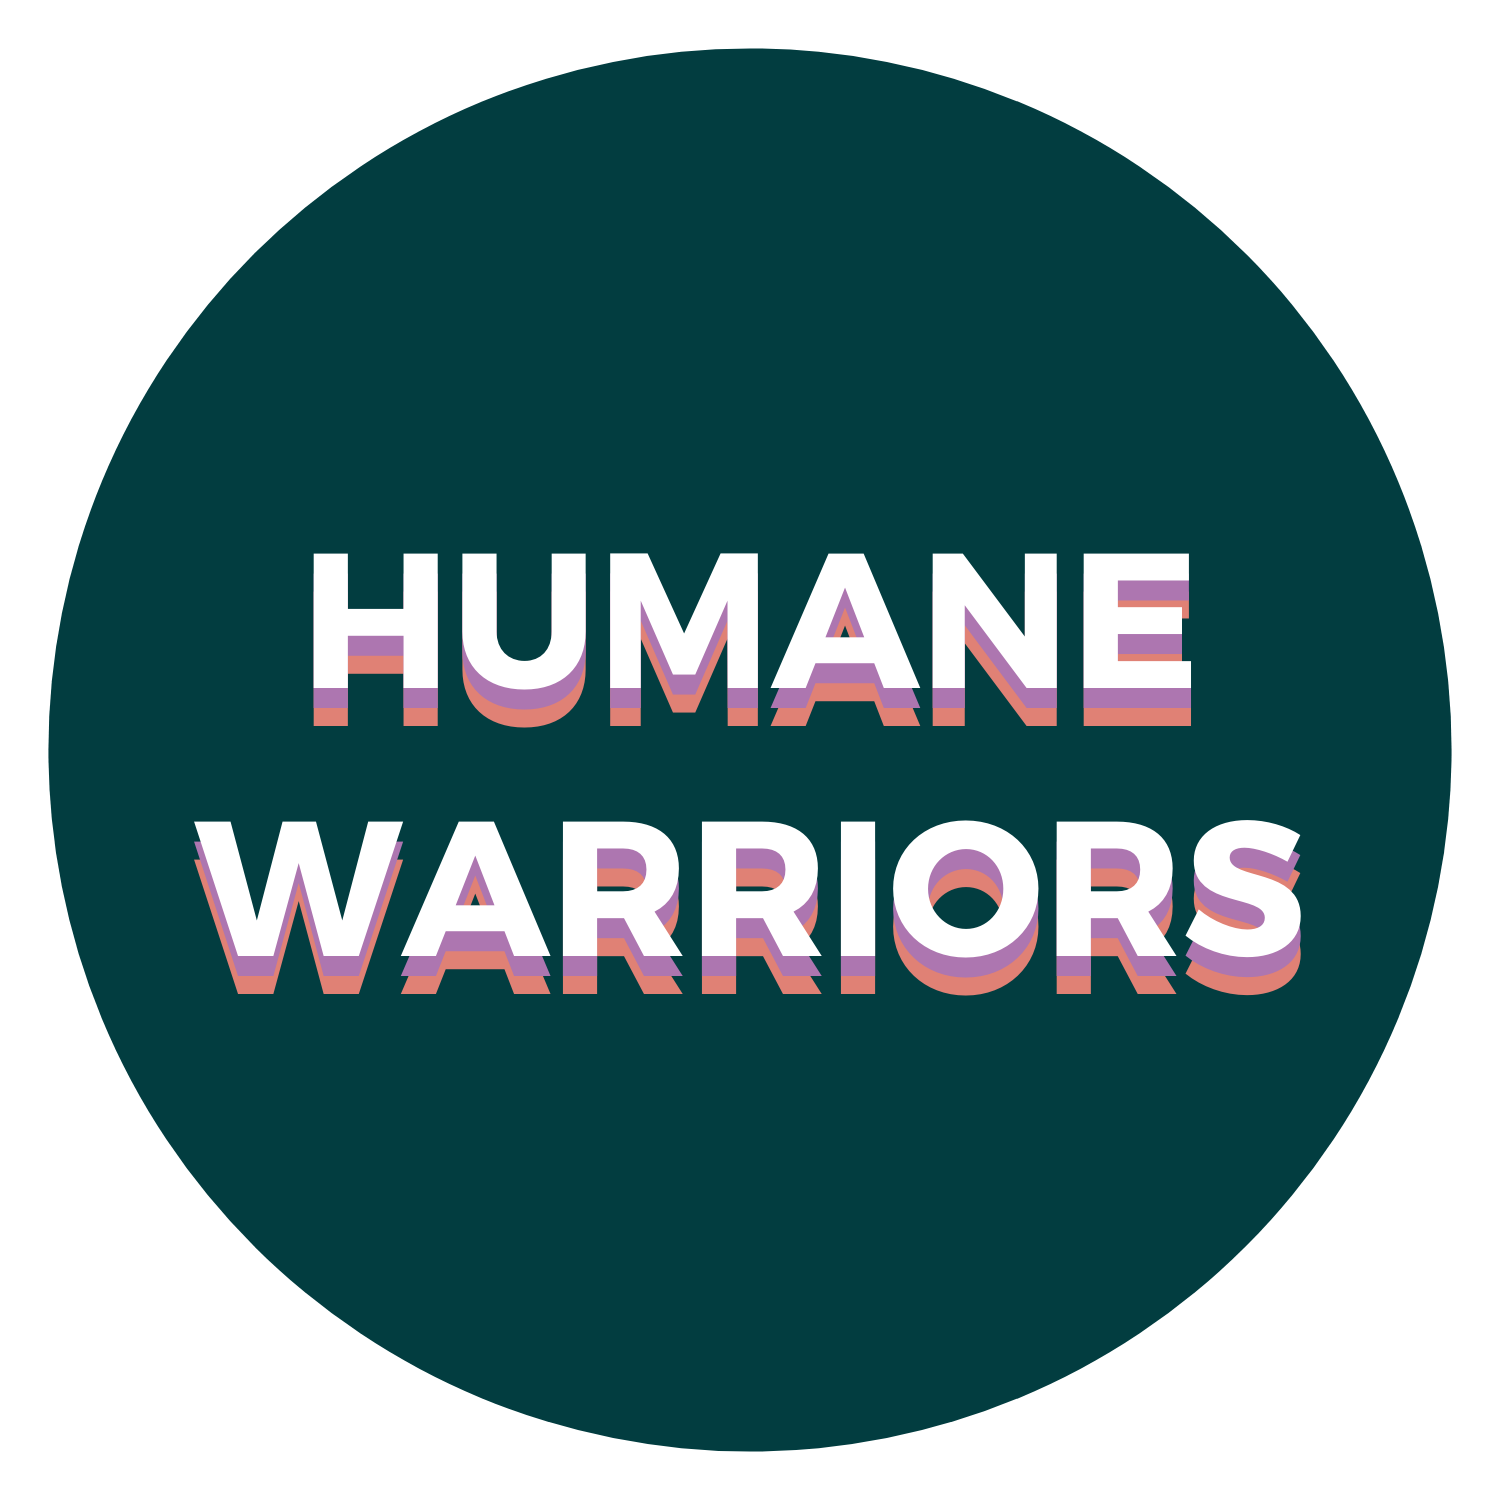 Humane Warriors logo